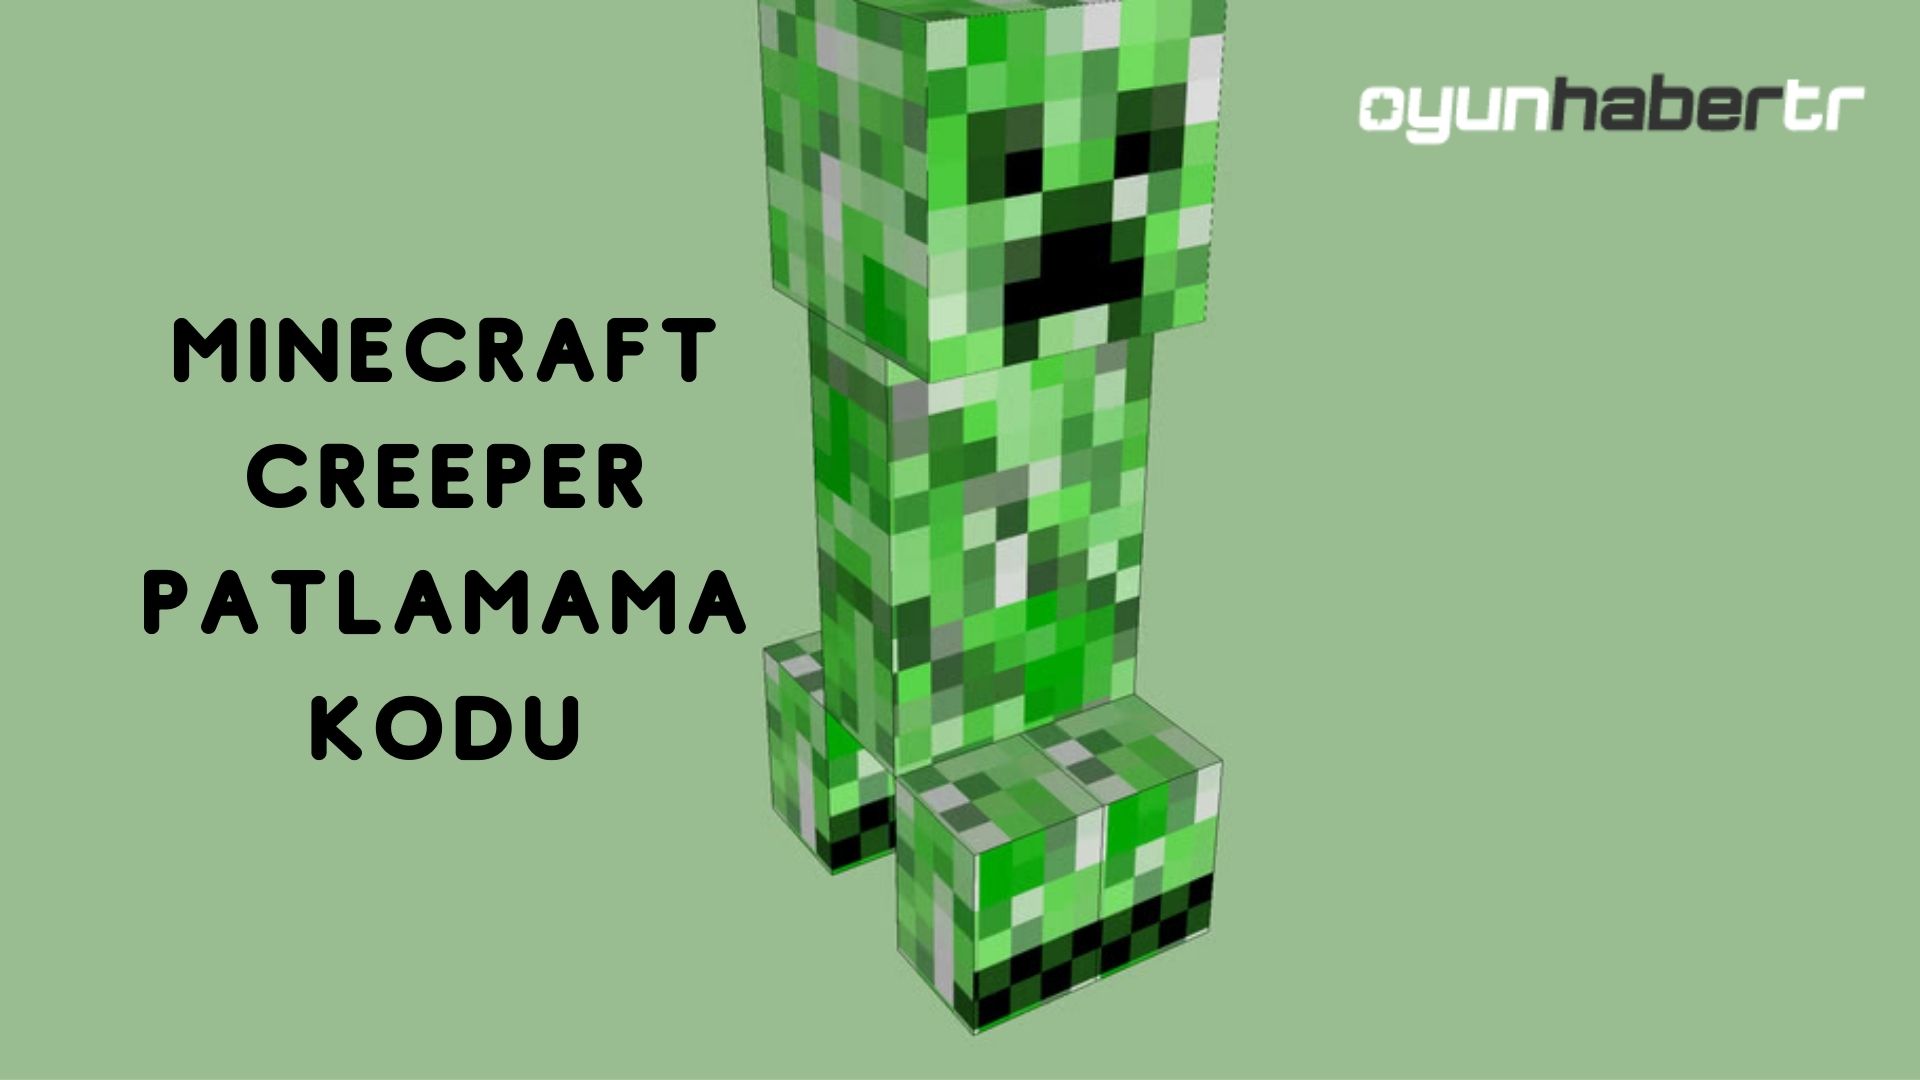 Minecraft Creeper Patlamama Kodu